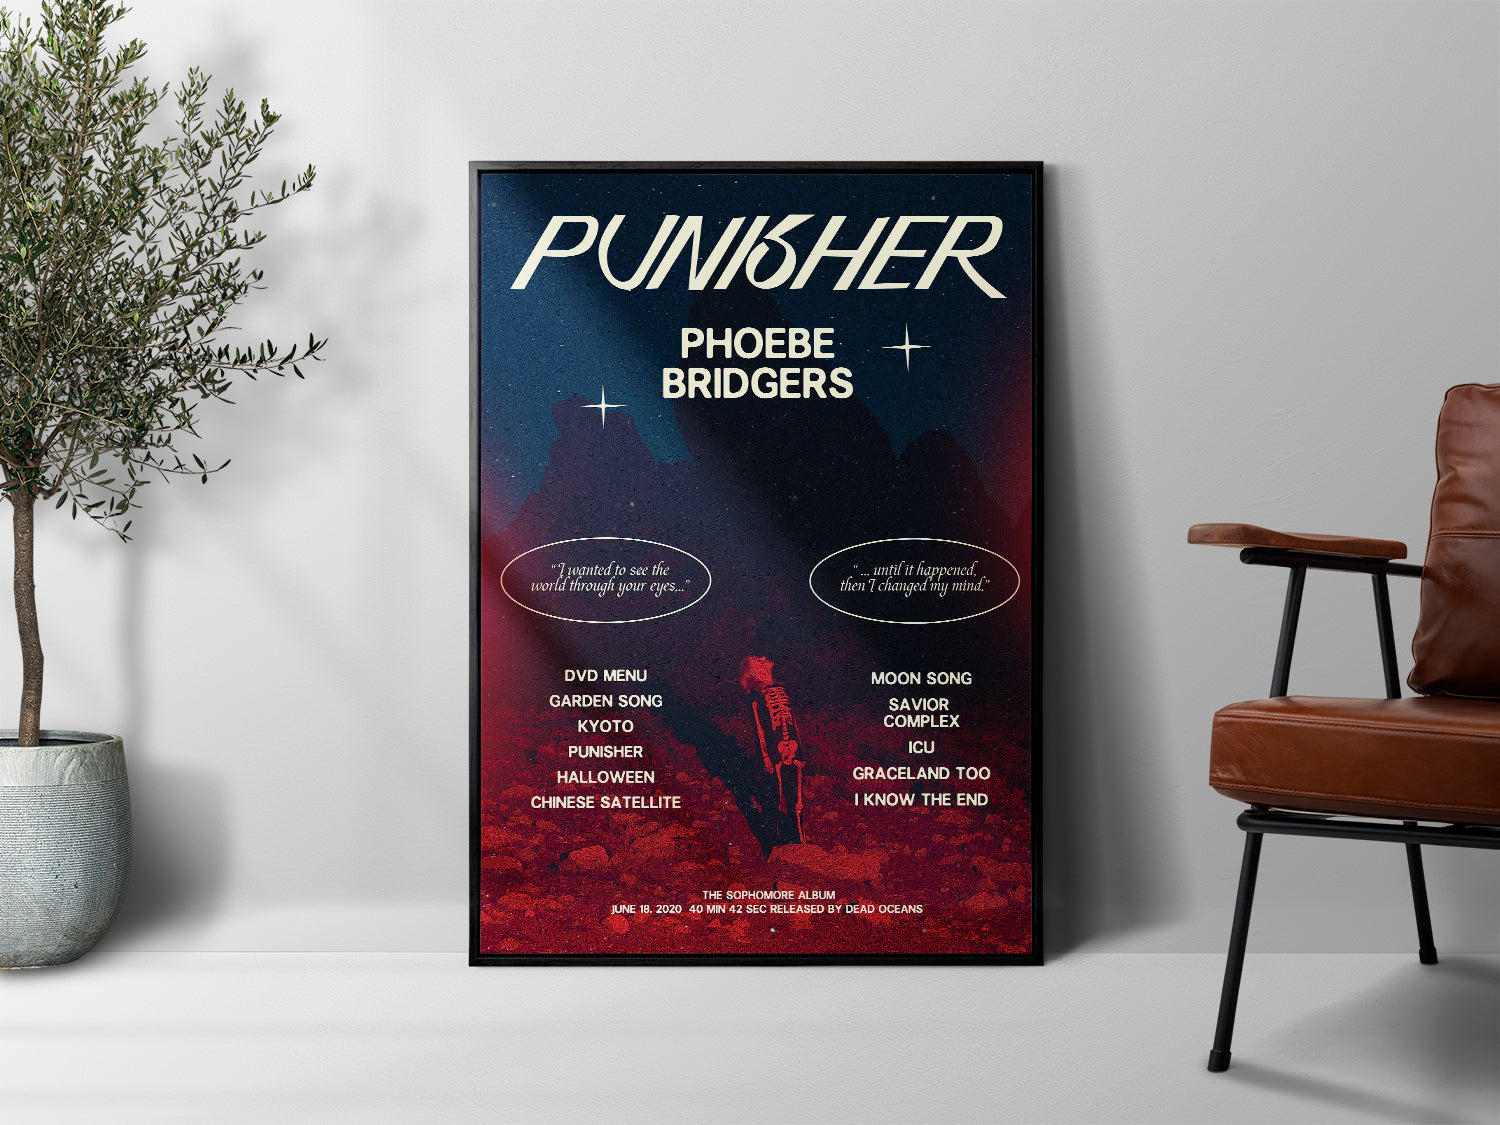 Phoebe Bridgers Poster - Punisher Album - Album Art Poster sold by